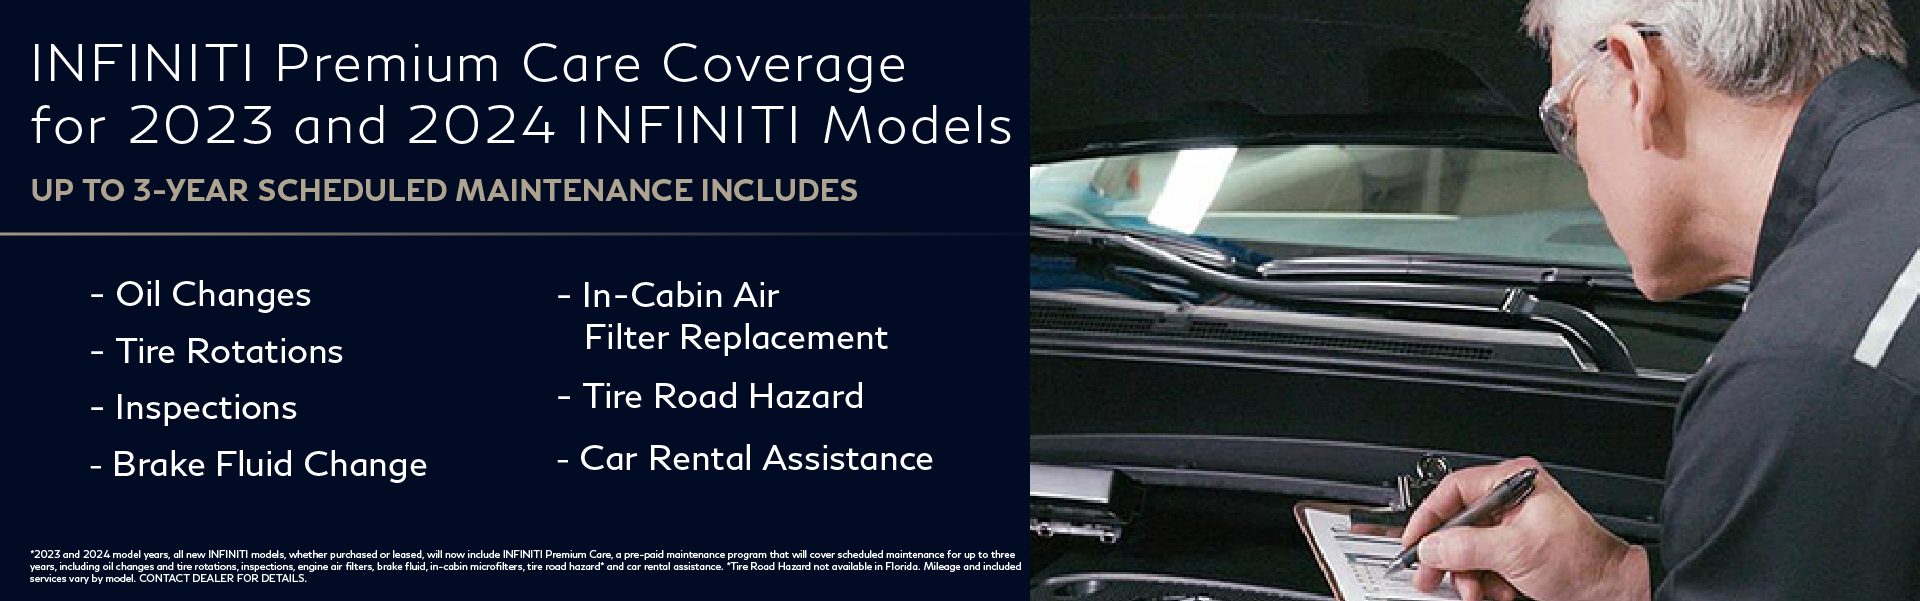 Infiniti Premium Care Coverage For 2024 Models